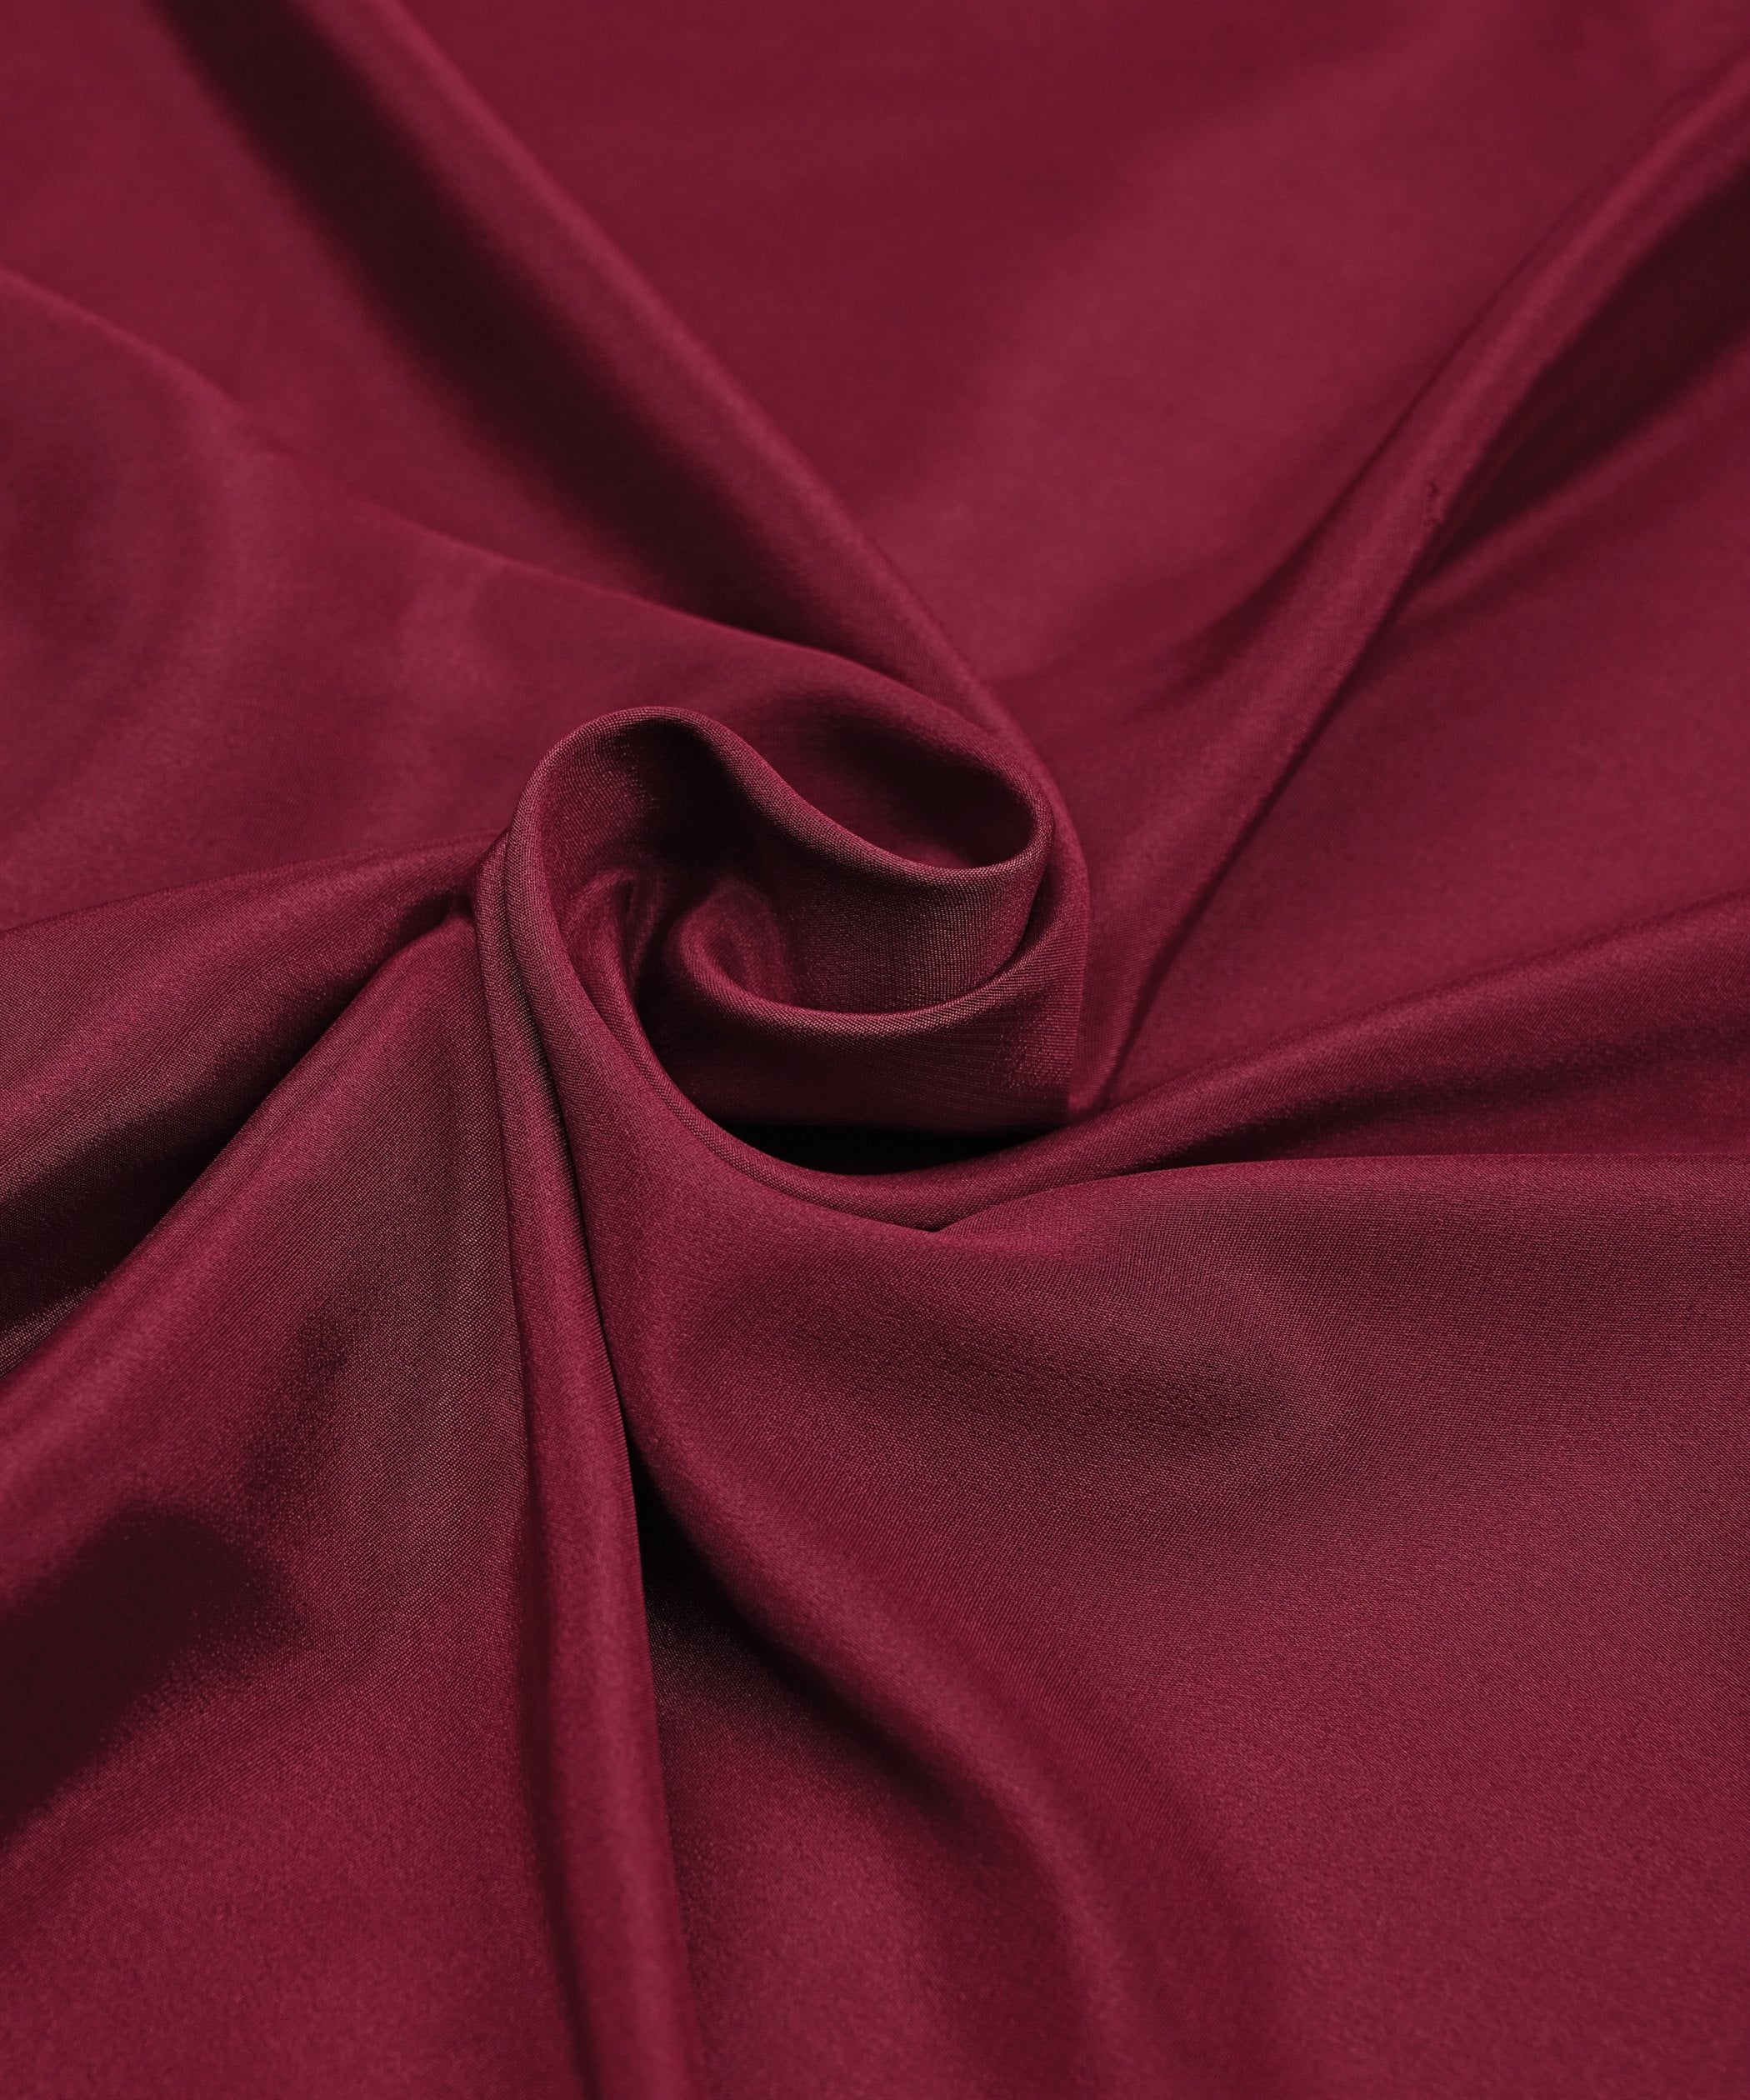 Maroon Plain Dyed Crepe Fabric